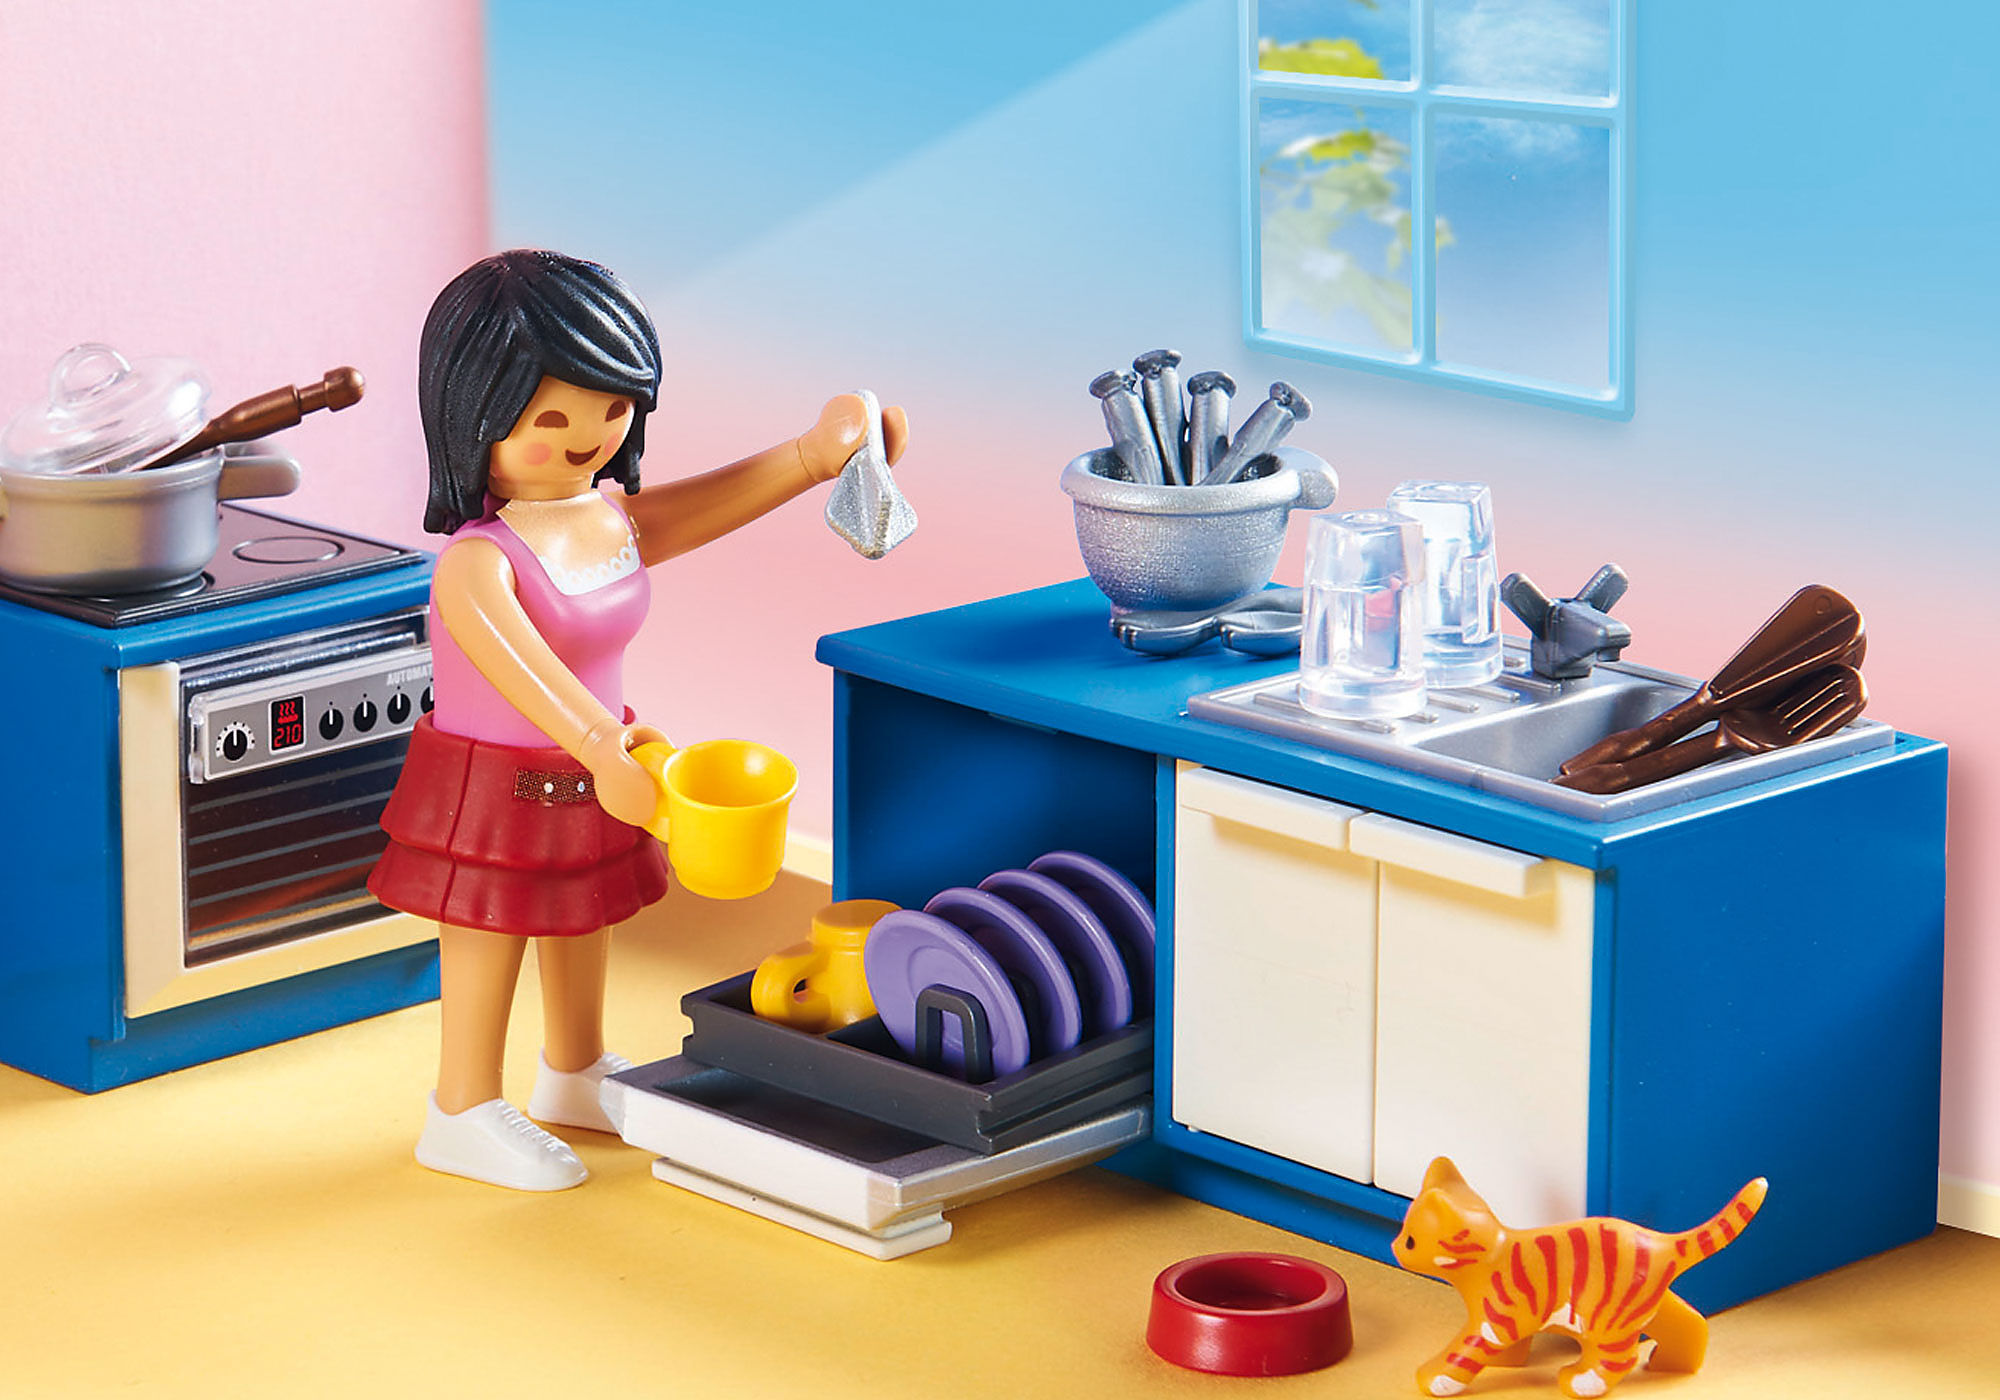 70206 - Playmobil Dollhouse - Cuisine familiale Playmobil : King